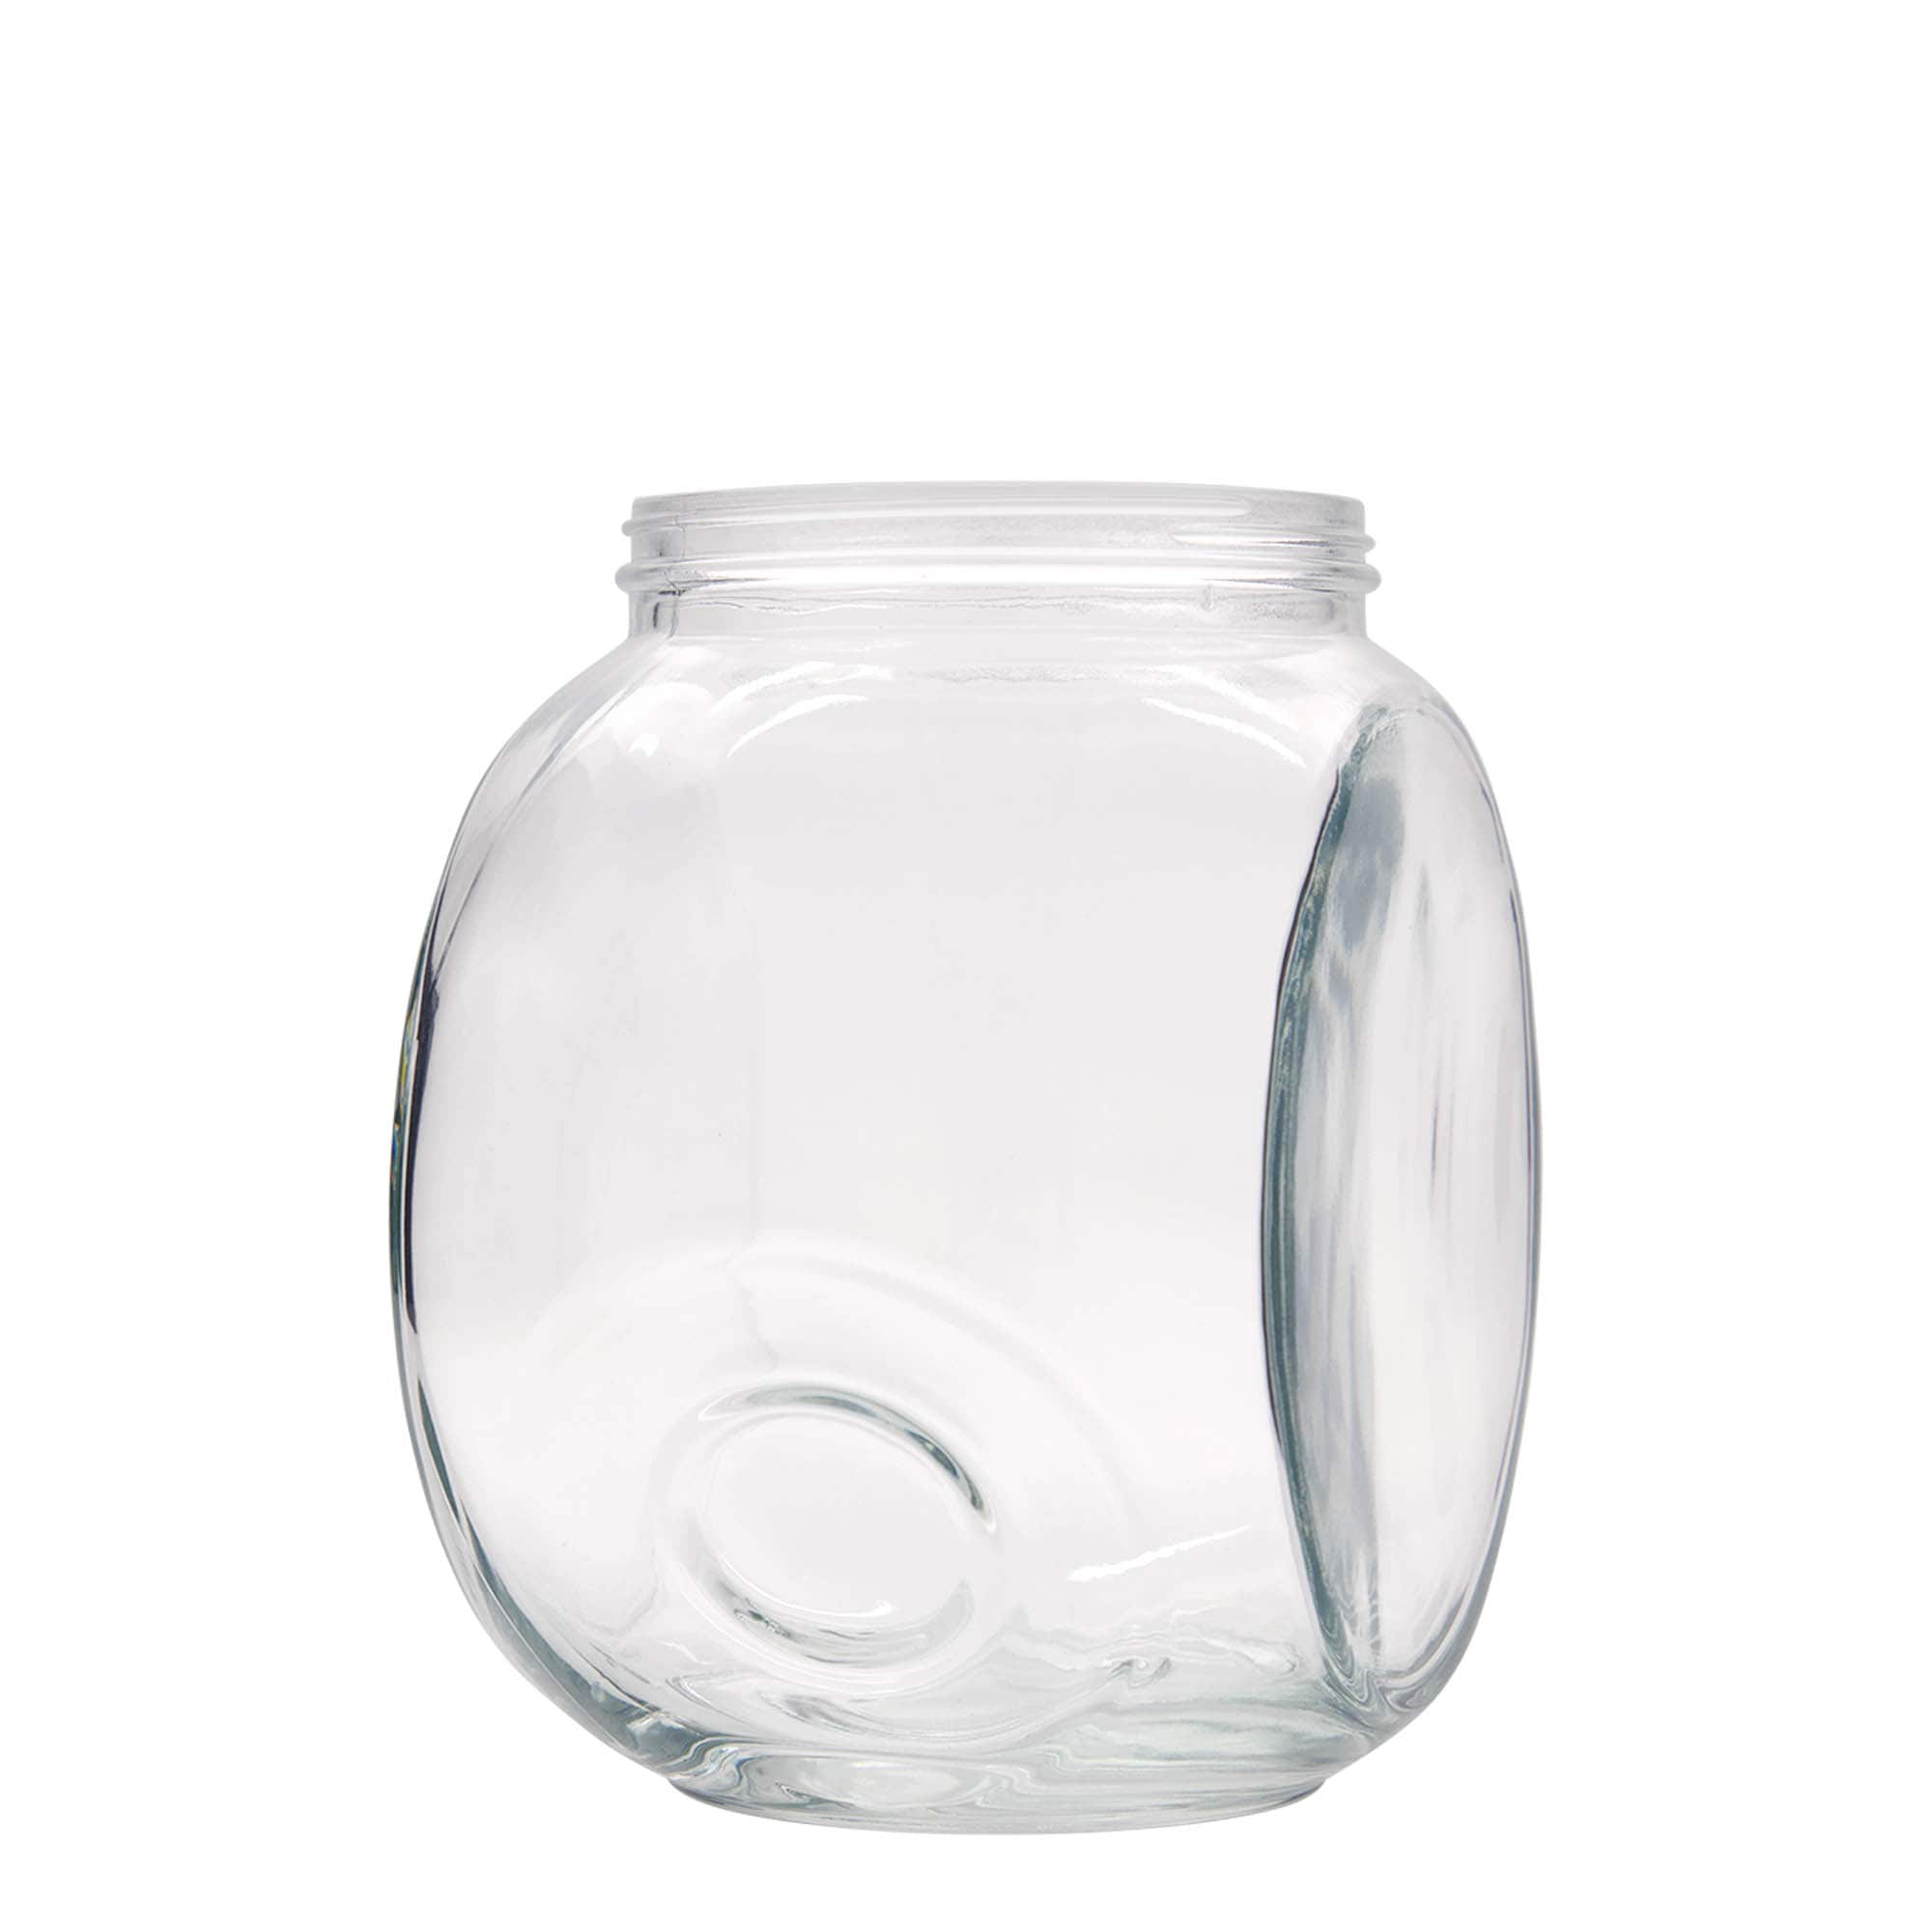 2,000 ml sweets jar 'Pandora', closure: screw cap